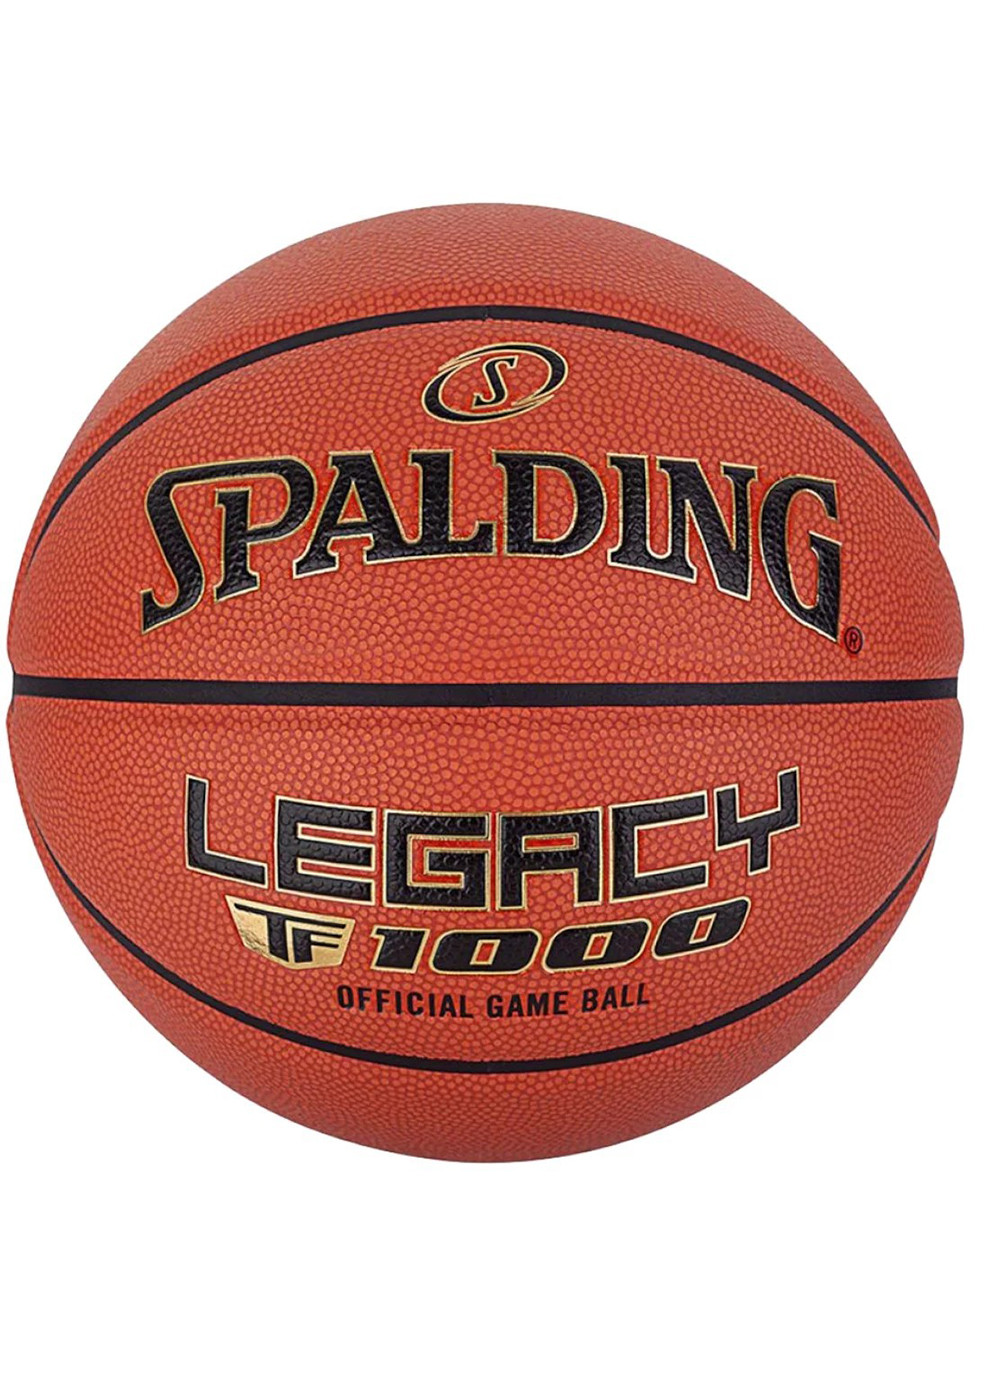 Баскетбольный Мяч TF-1000 Legacy FIBA оранжевый Уни Spalding (260633768)